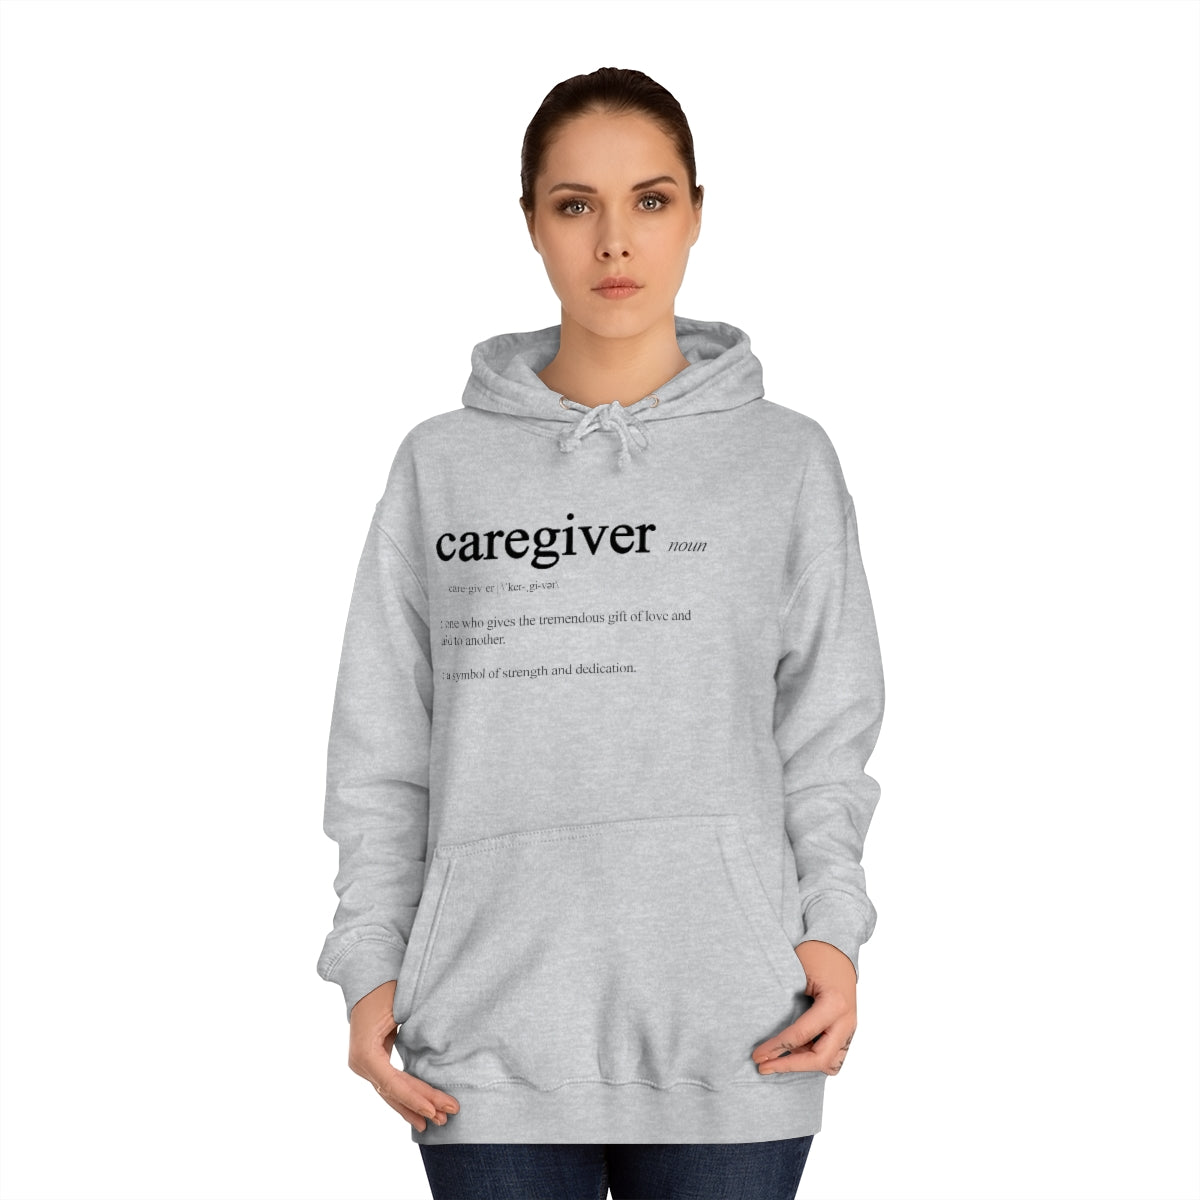 Caregiver Definition Hoodie